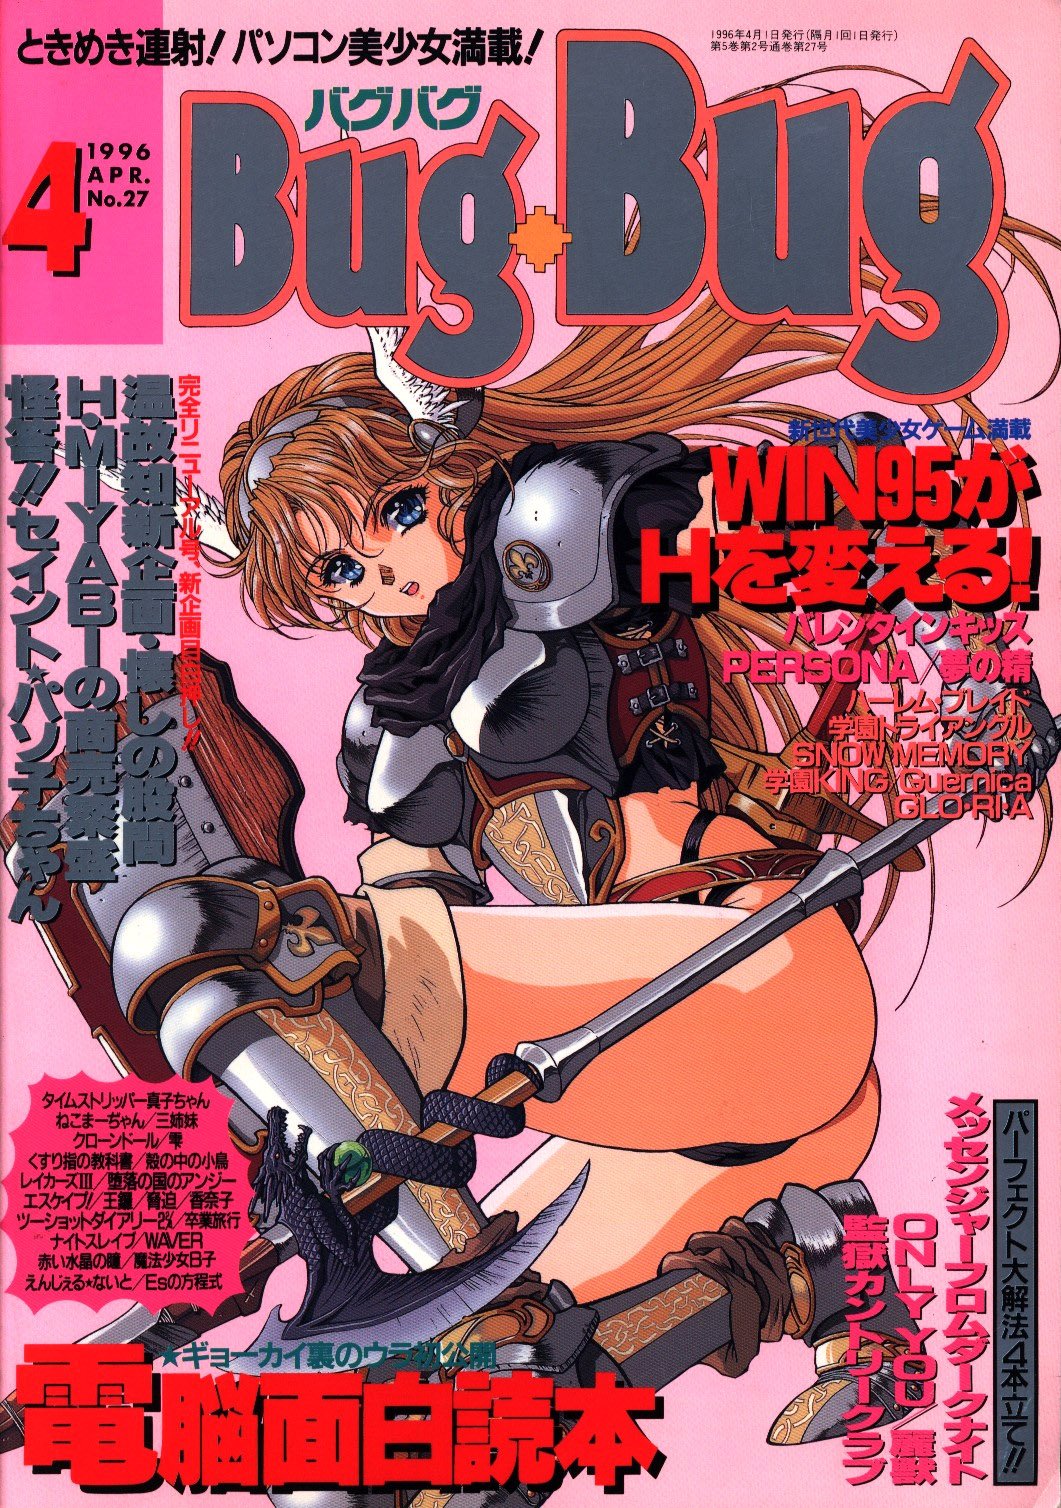 BugBug 027 (April 1996)